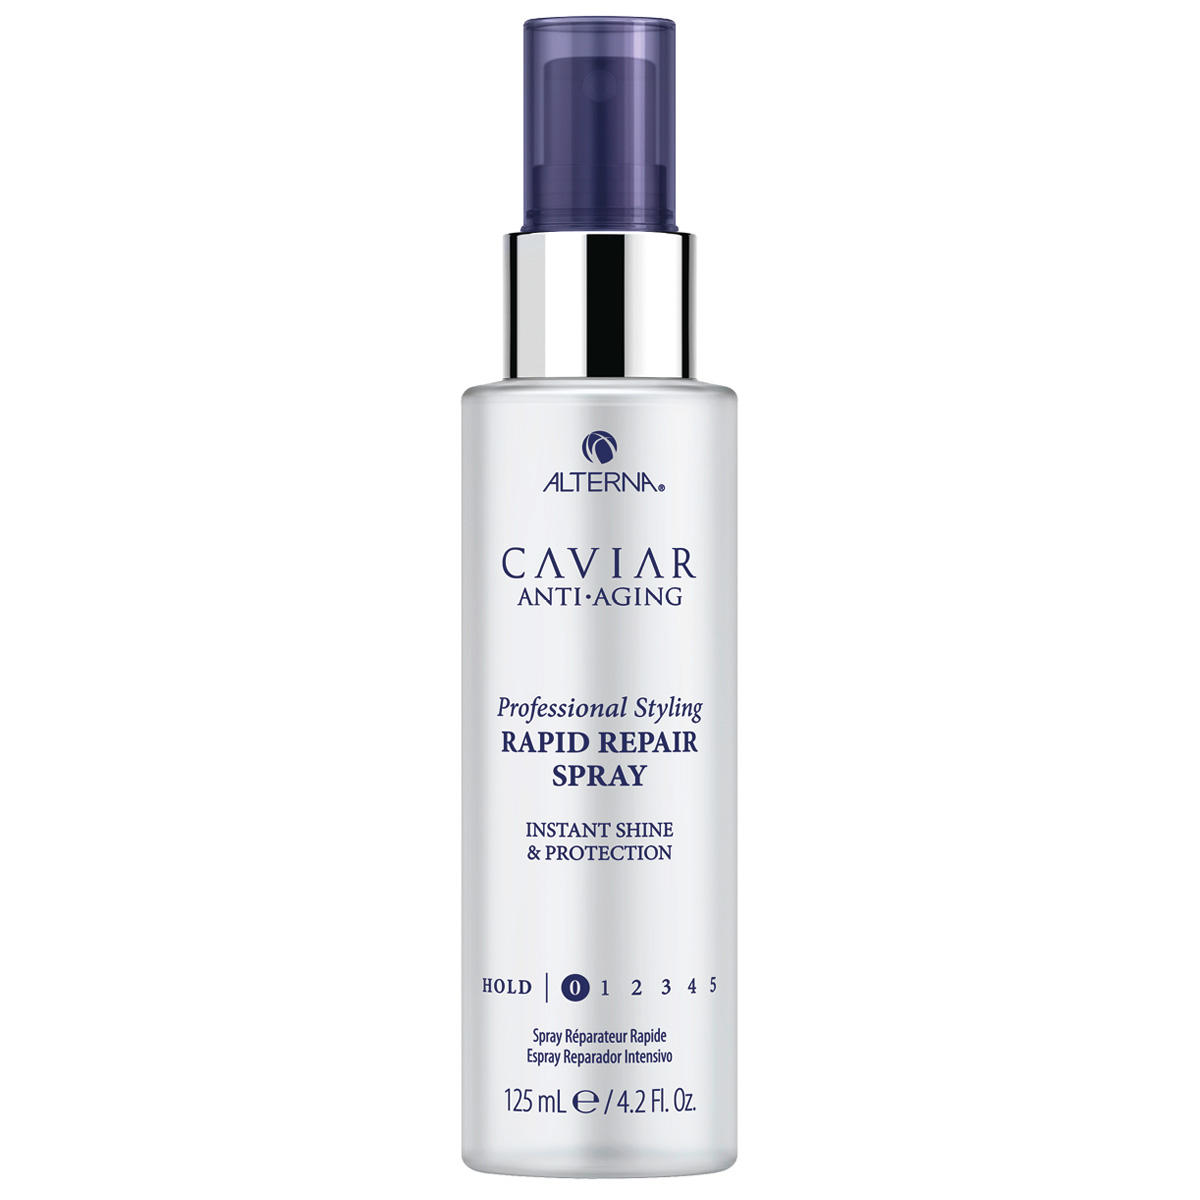 Alterna Caviar Anti-Aging Professional Styling Rapid Repair Spray 125 ml - 2